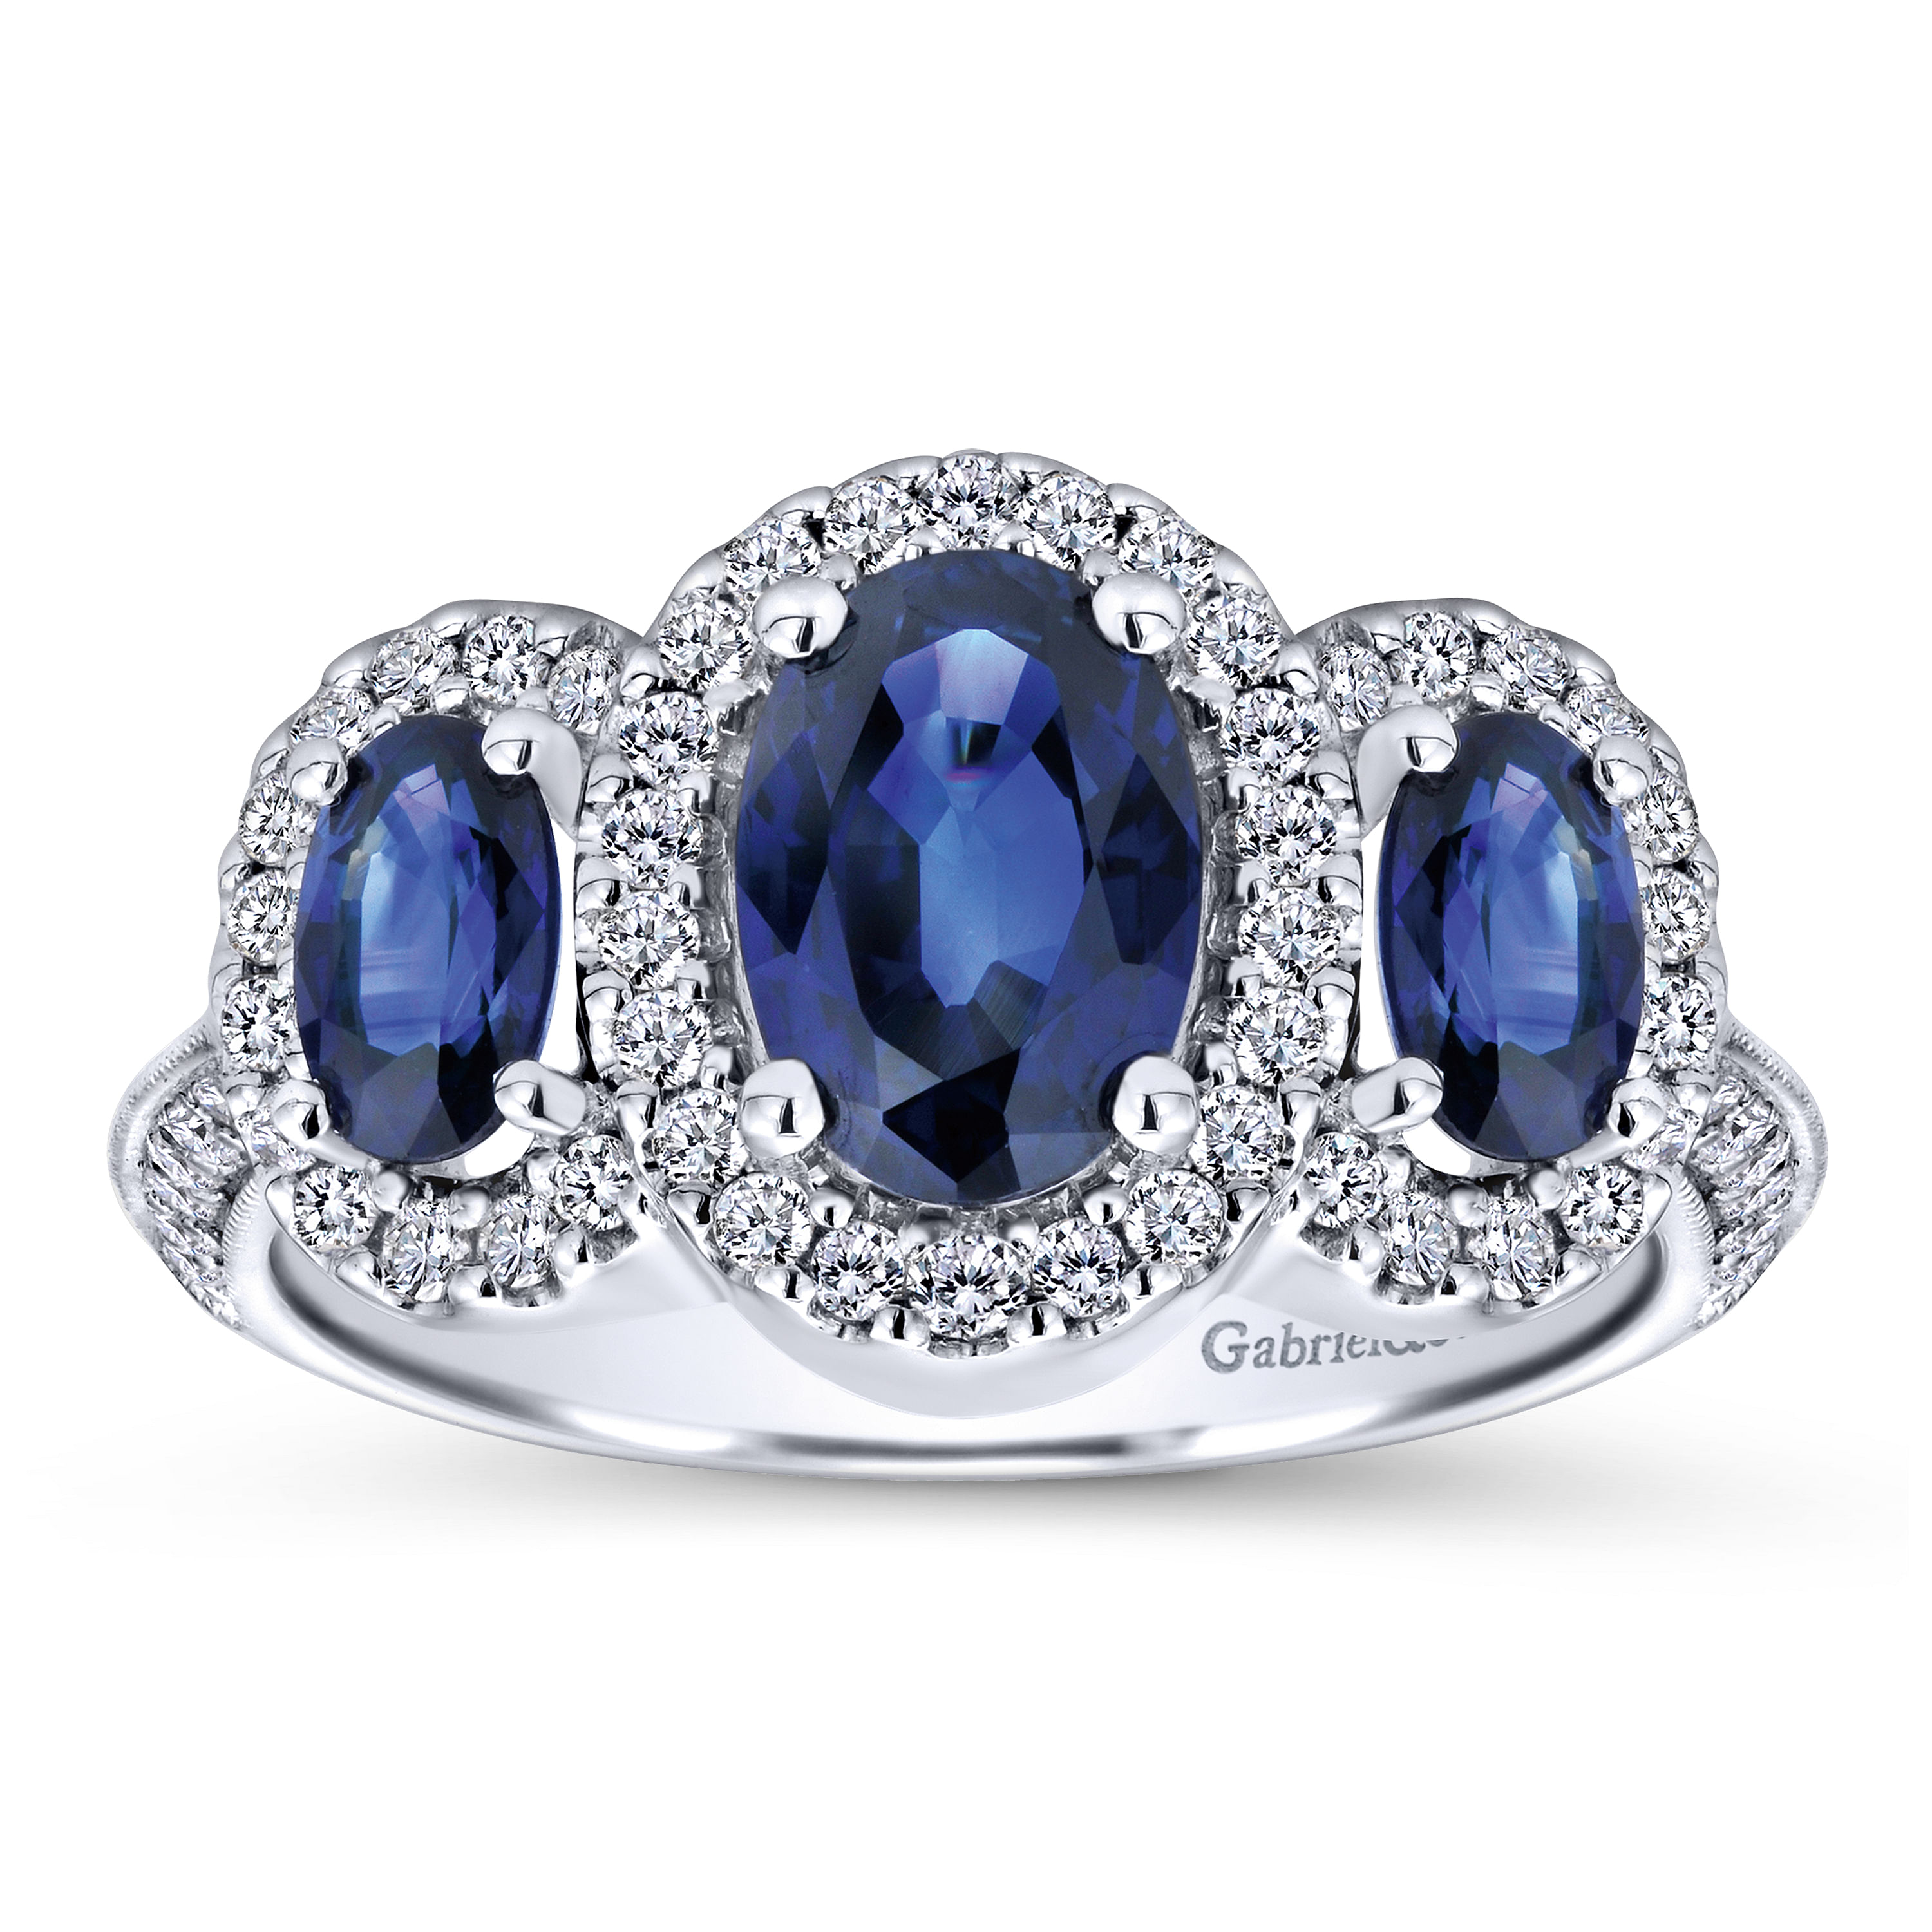 14K White Gold Three Row Halo Sapphire and Diamond Ring